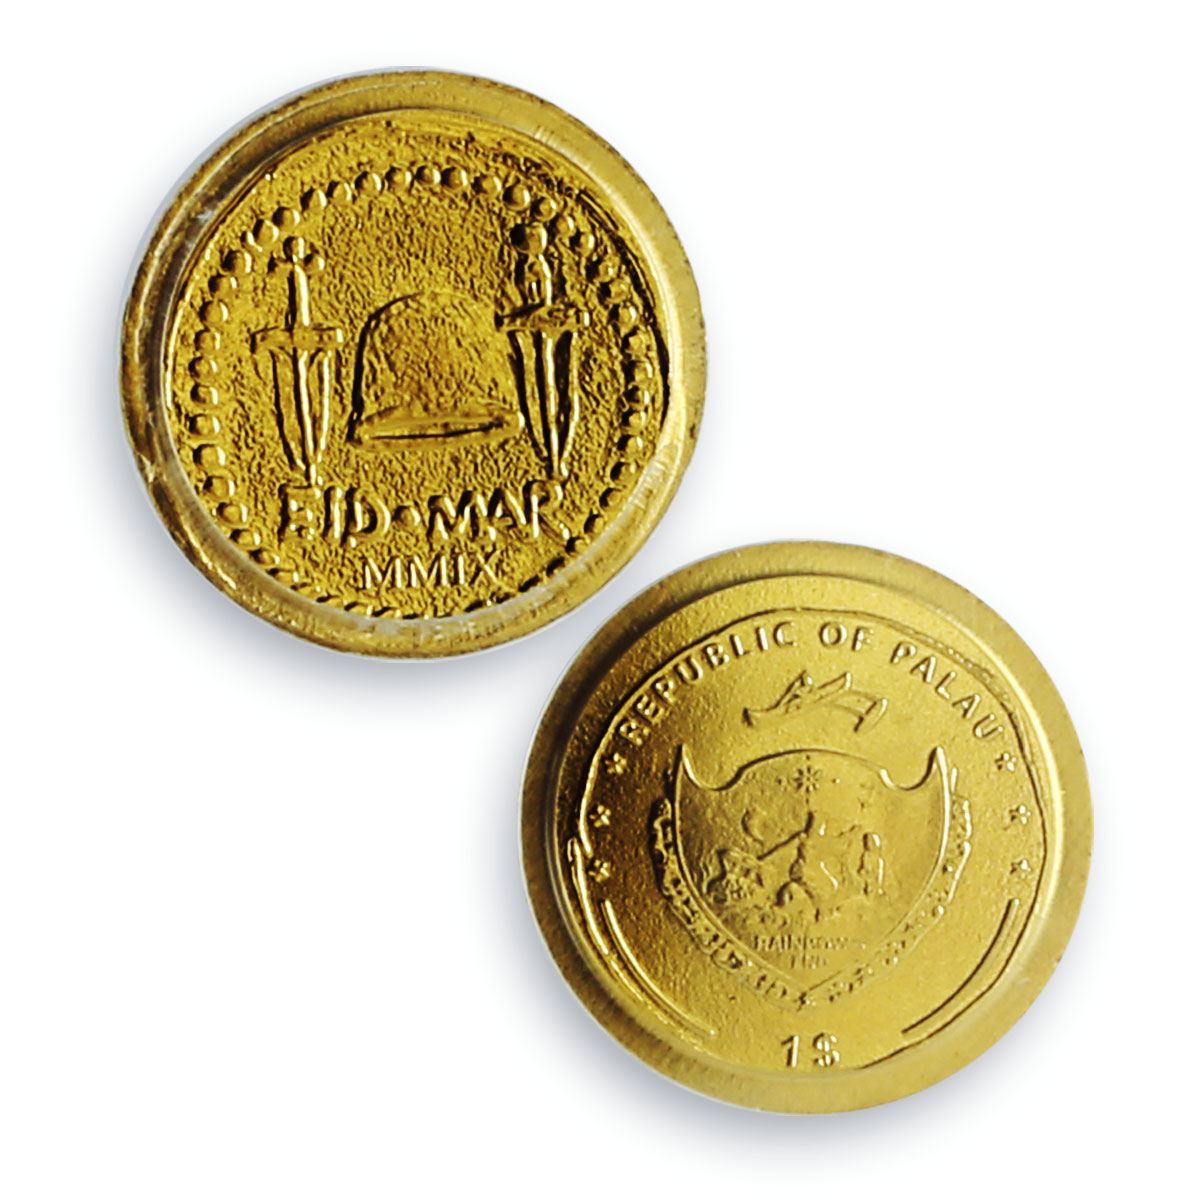 Palau 1 dollar Rome Empire Emperor Brutus Politics MS70 PCGS gold coin 2009